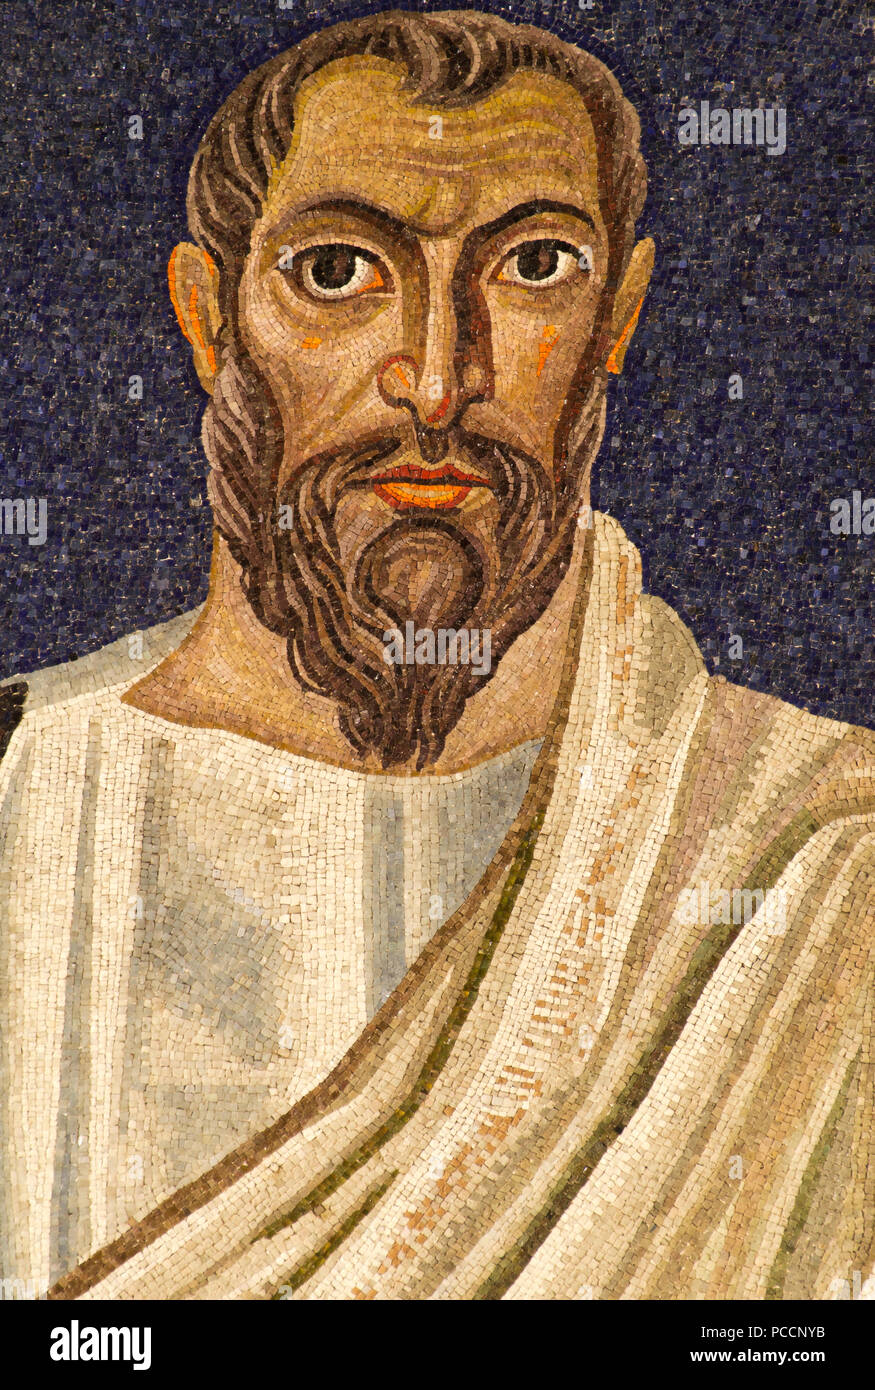 Saint Paul - Detail des 6. Jahrhunderts Apsis Mosaik (530 AC) - Meisterwerk der frühen christlichen Kunst - Basilika Santi Cosma e Damiano - Rom Stockfoto